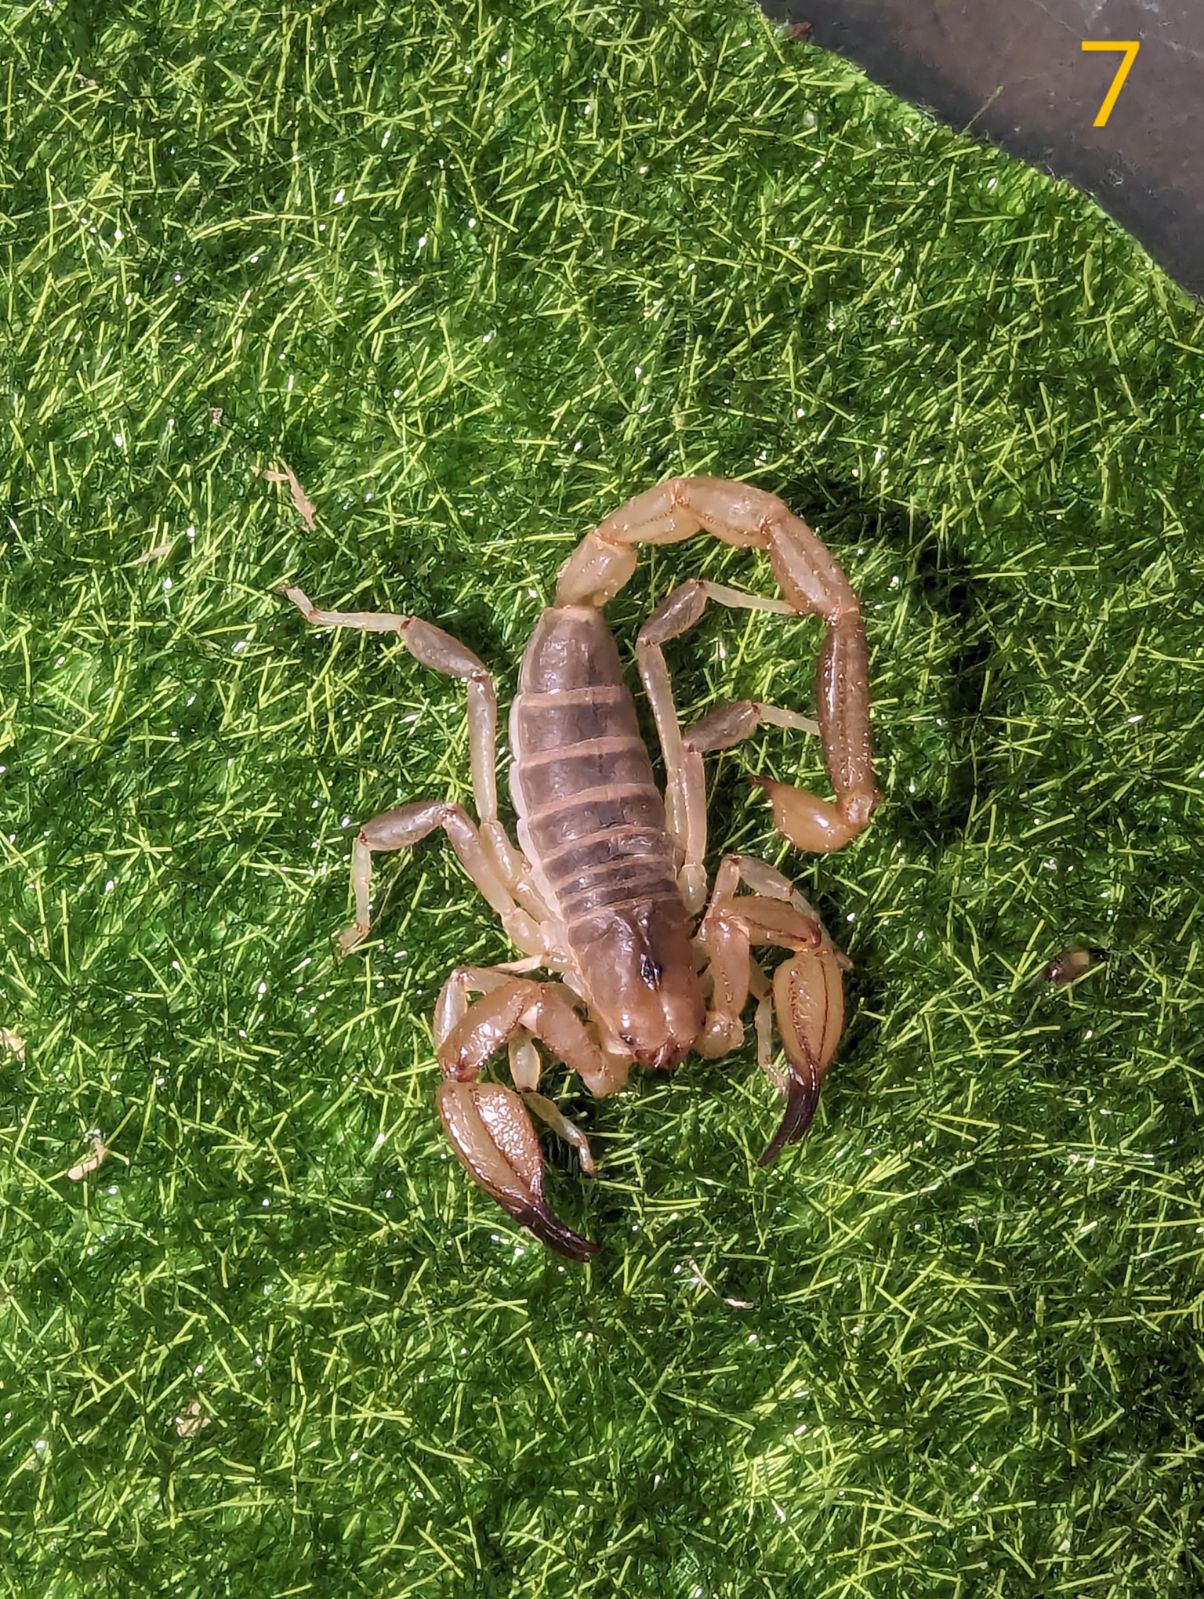 Sand scorpion (Urodacus sp.)